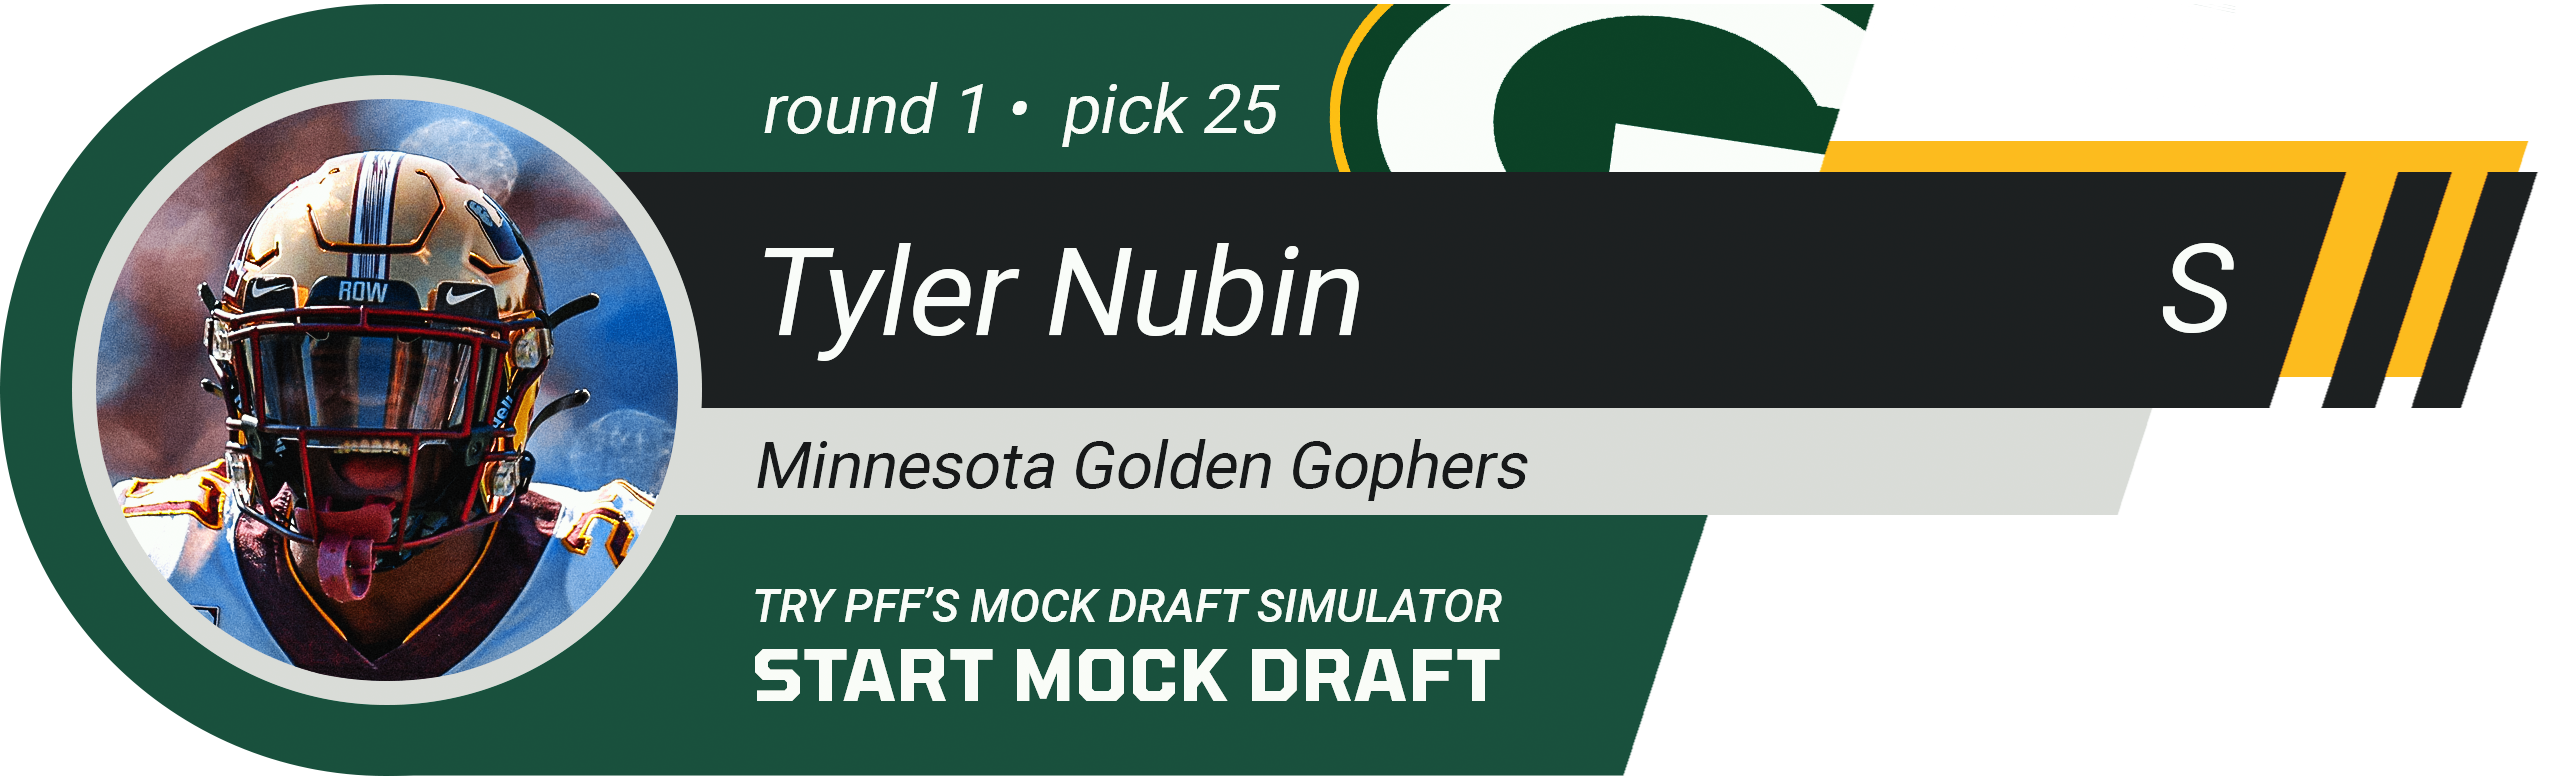 25. GREEN BAY PACKERS: S Tyler Nubin, Minnesota